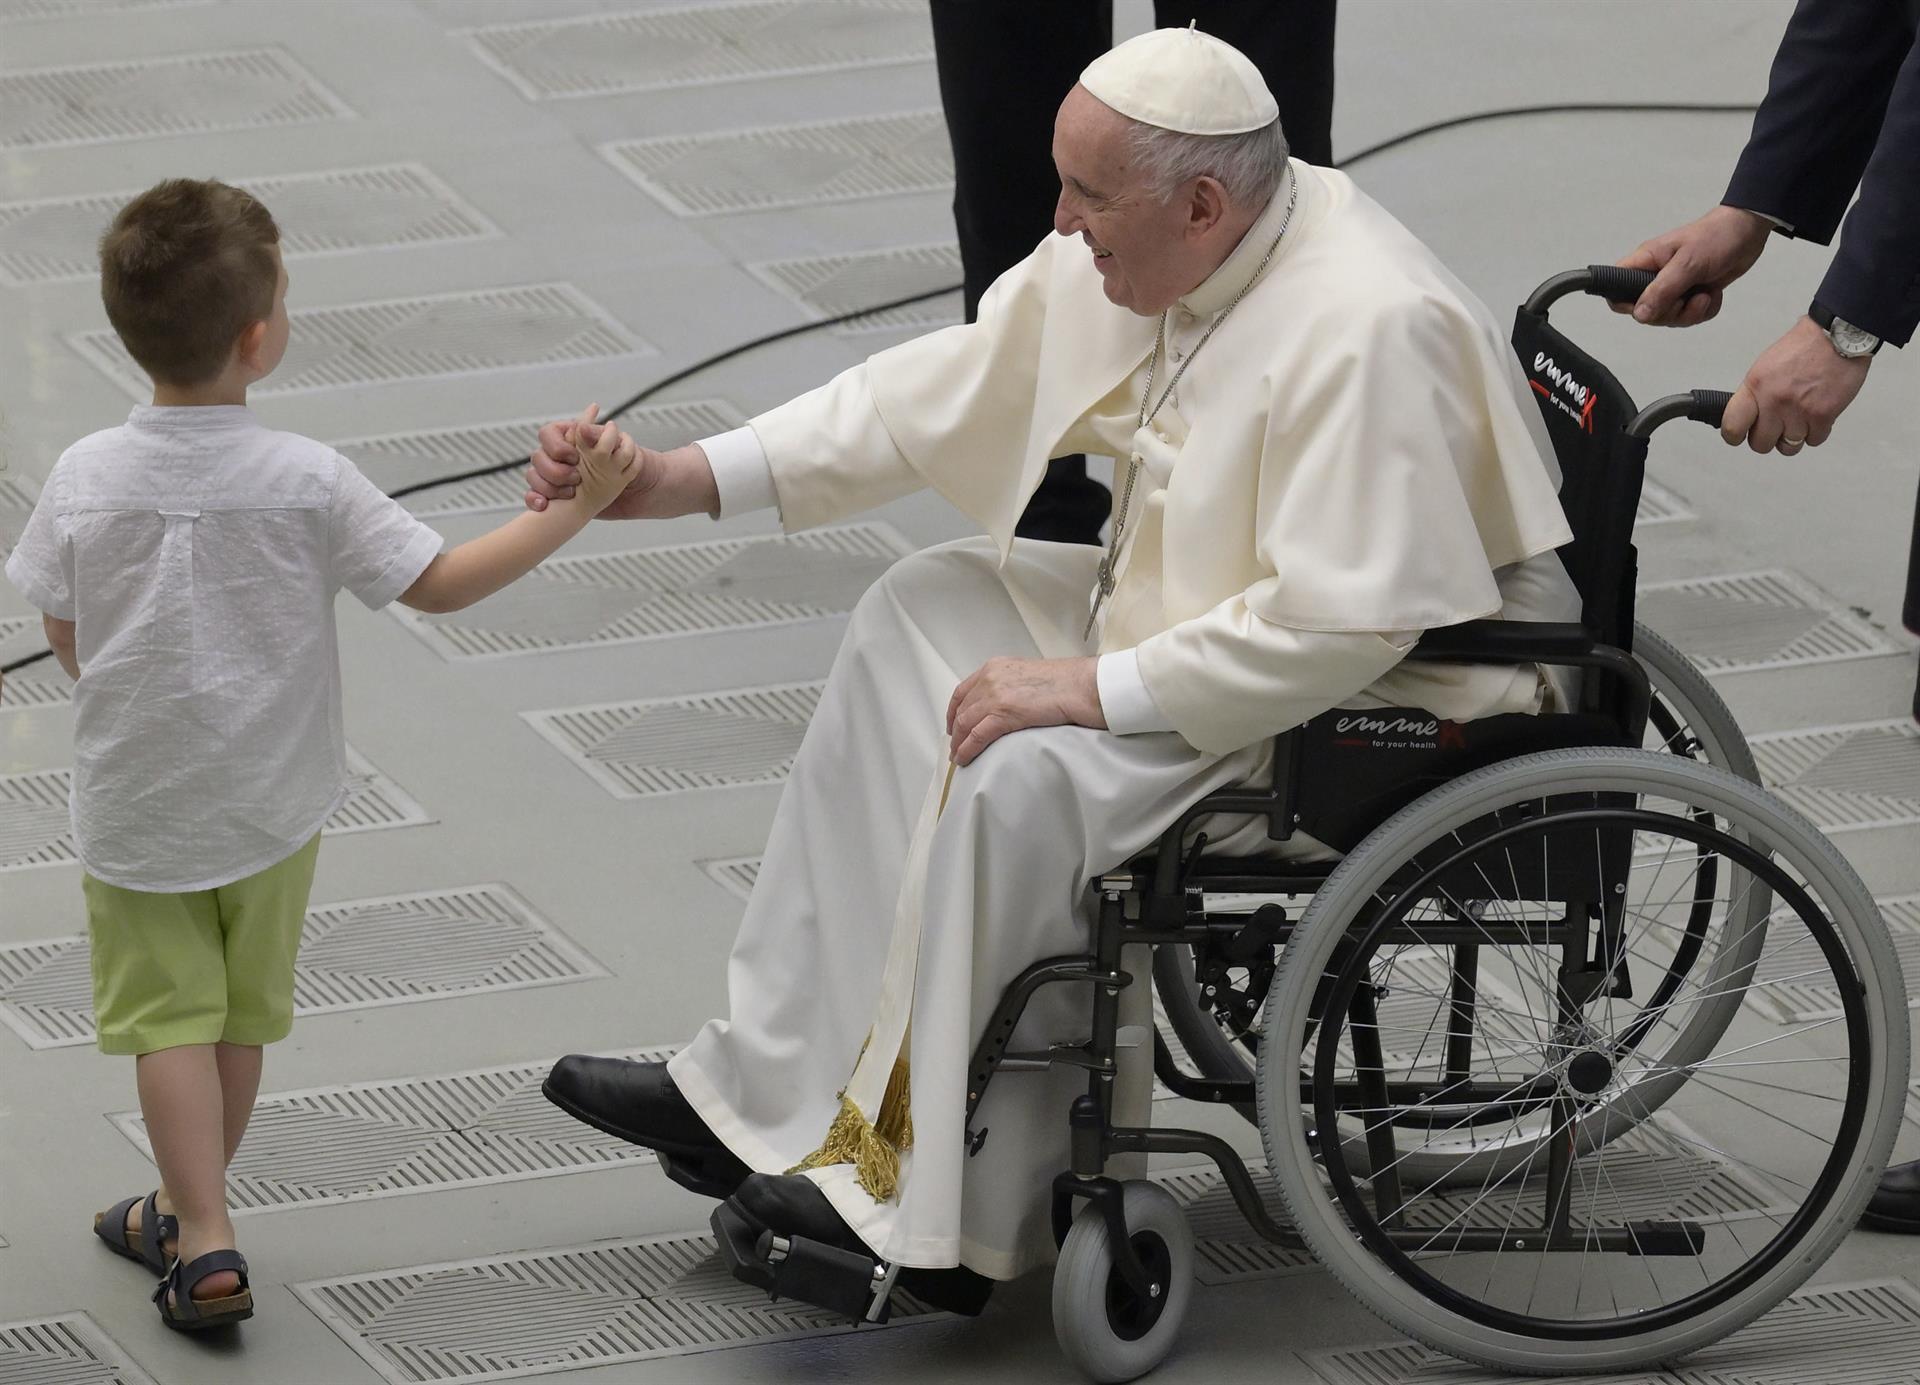 El dolor de rodilla del papa Francisco obliga a cancelar la misa del Corpus Christi